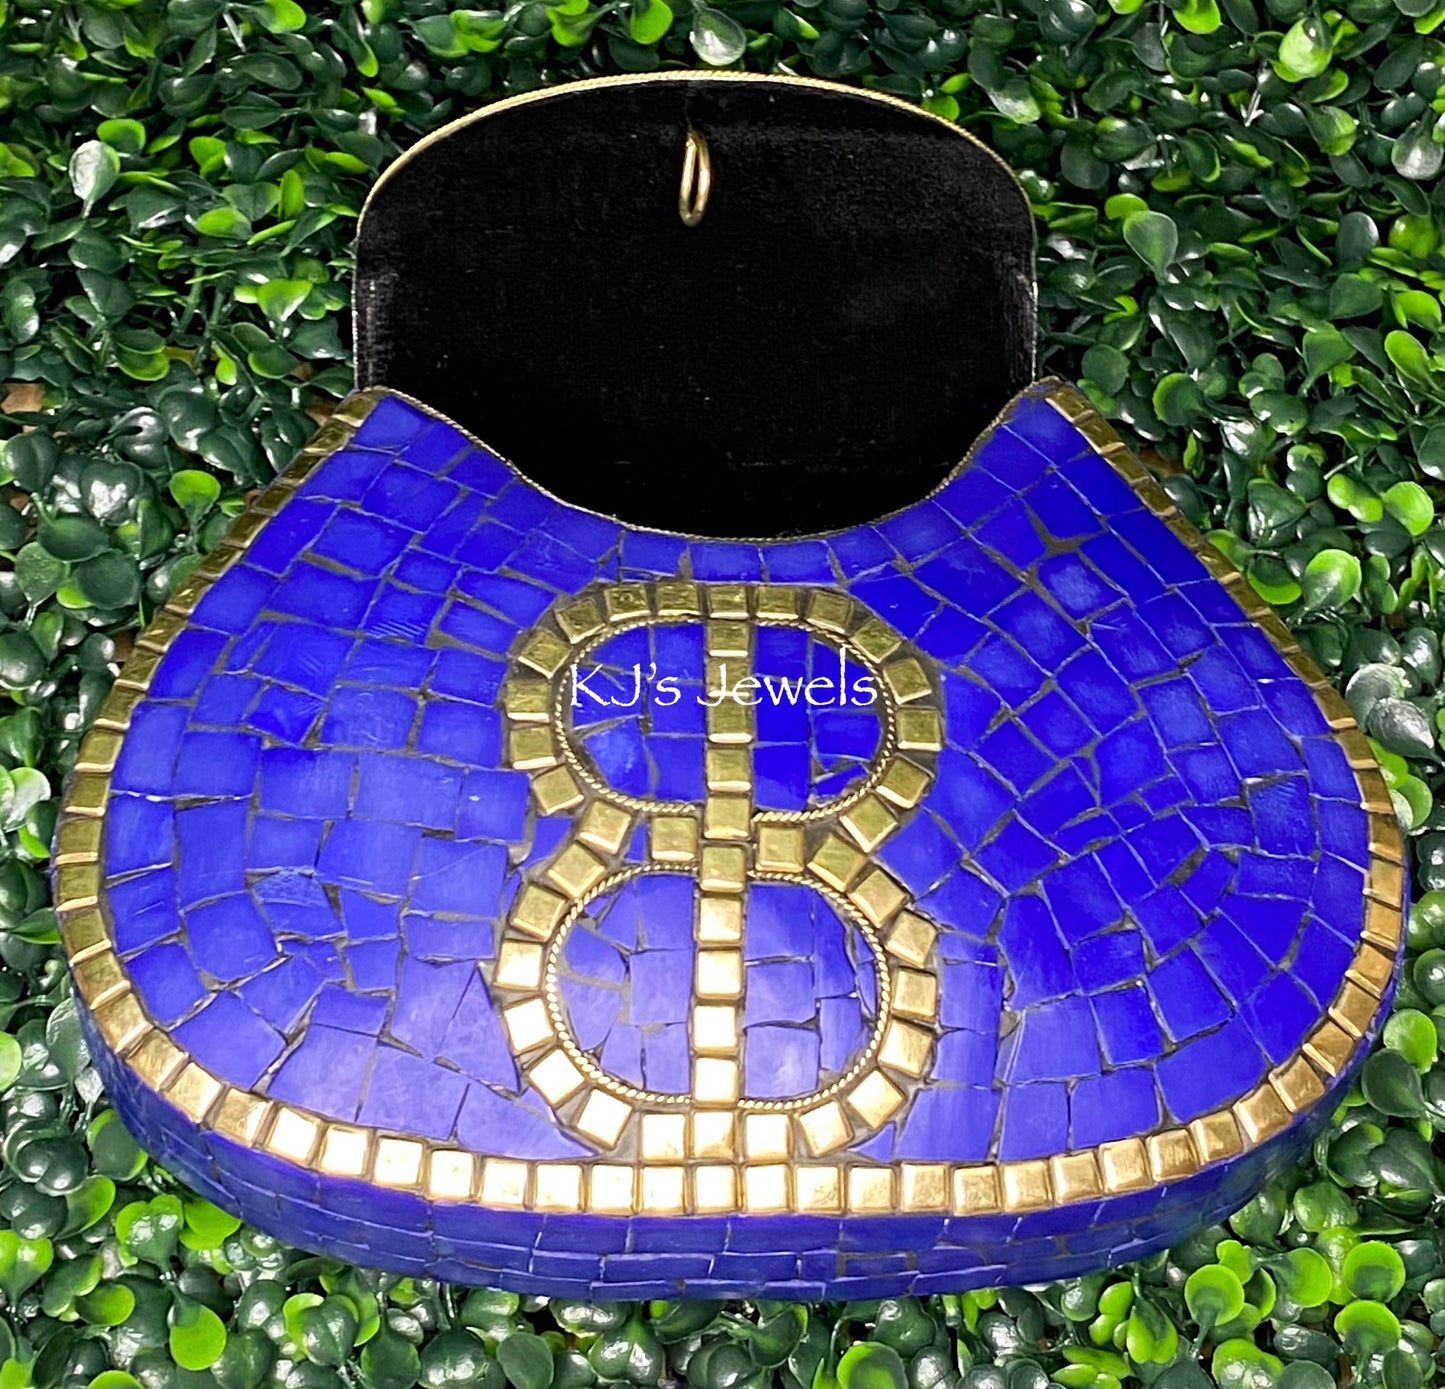 Ladies' Mosaic Tile Handbag/Purse with Gold Accent Tiles